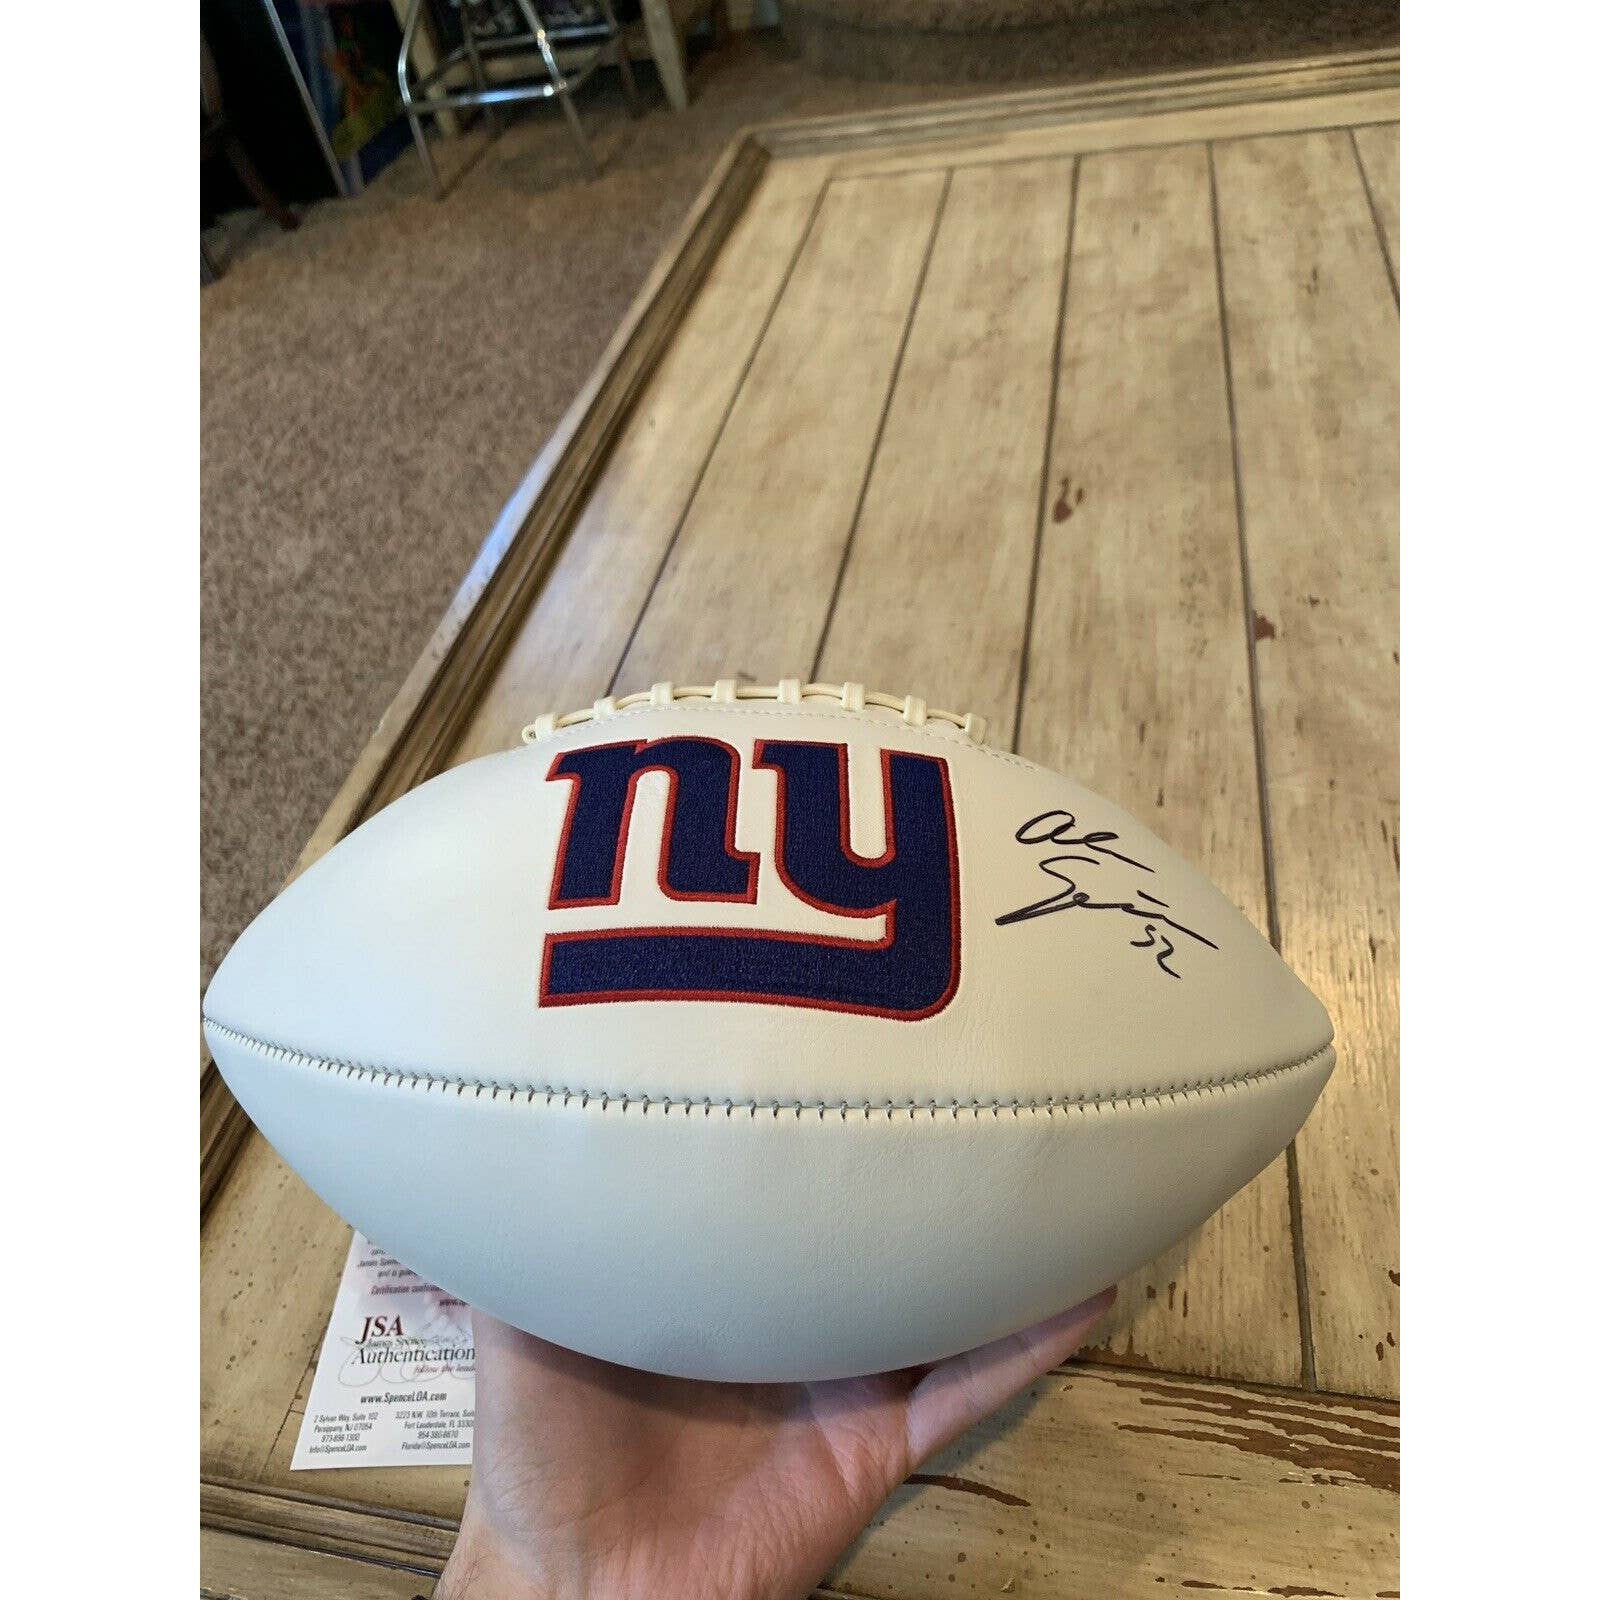 Alec Ogletree Autographed/Signed Football JSA COA New York Giants - TreasuresEvolved